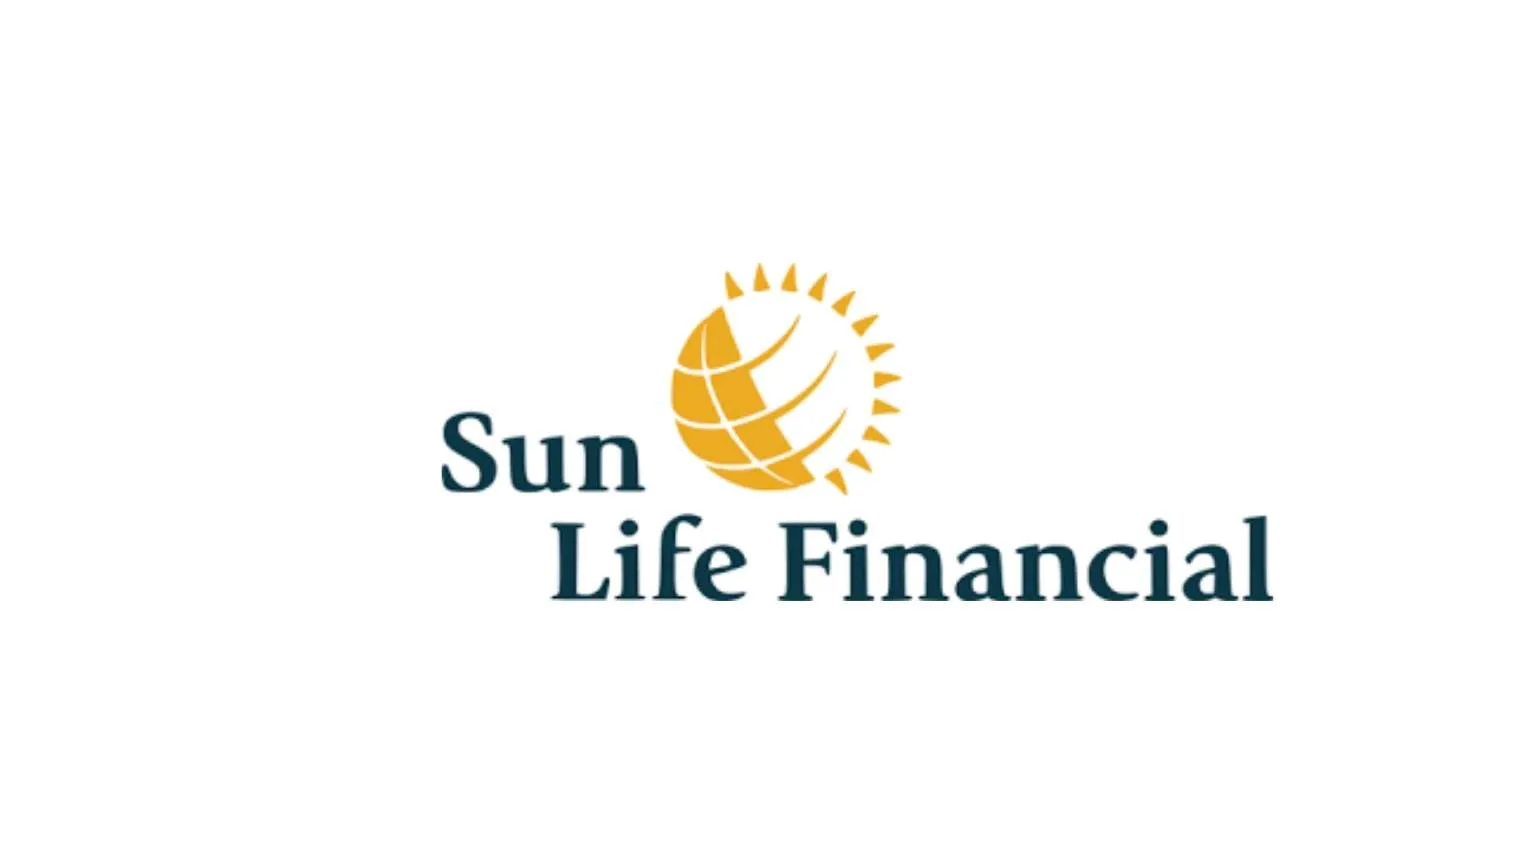 is sun life and minnesota life insurance the same thing